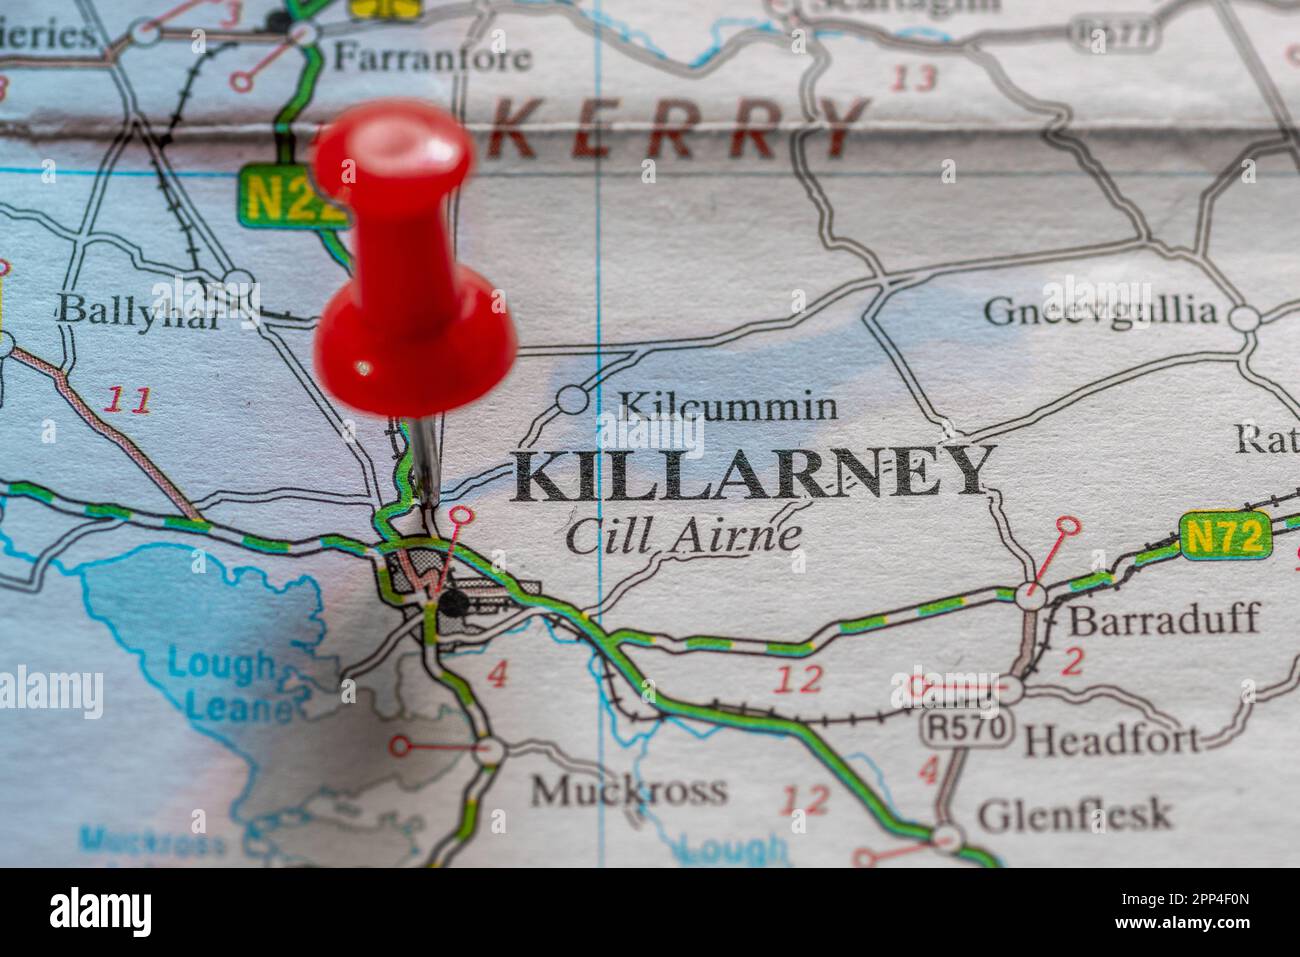 Pin in map marking Killarney, Ireland. Stock Photo